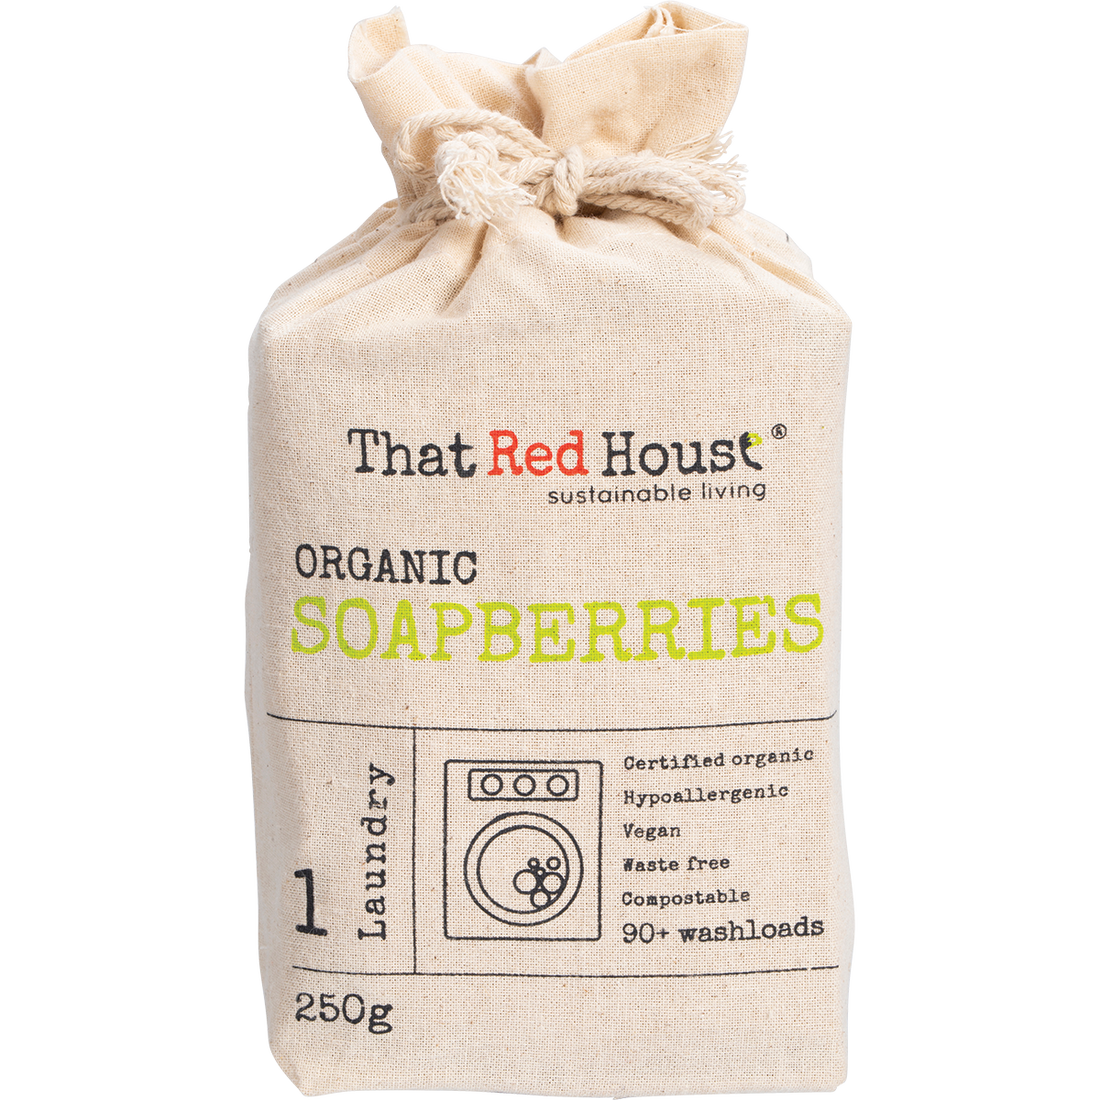 Soapberries - The ulitmate toxic free laundry detergent